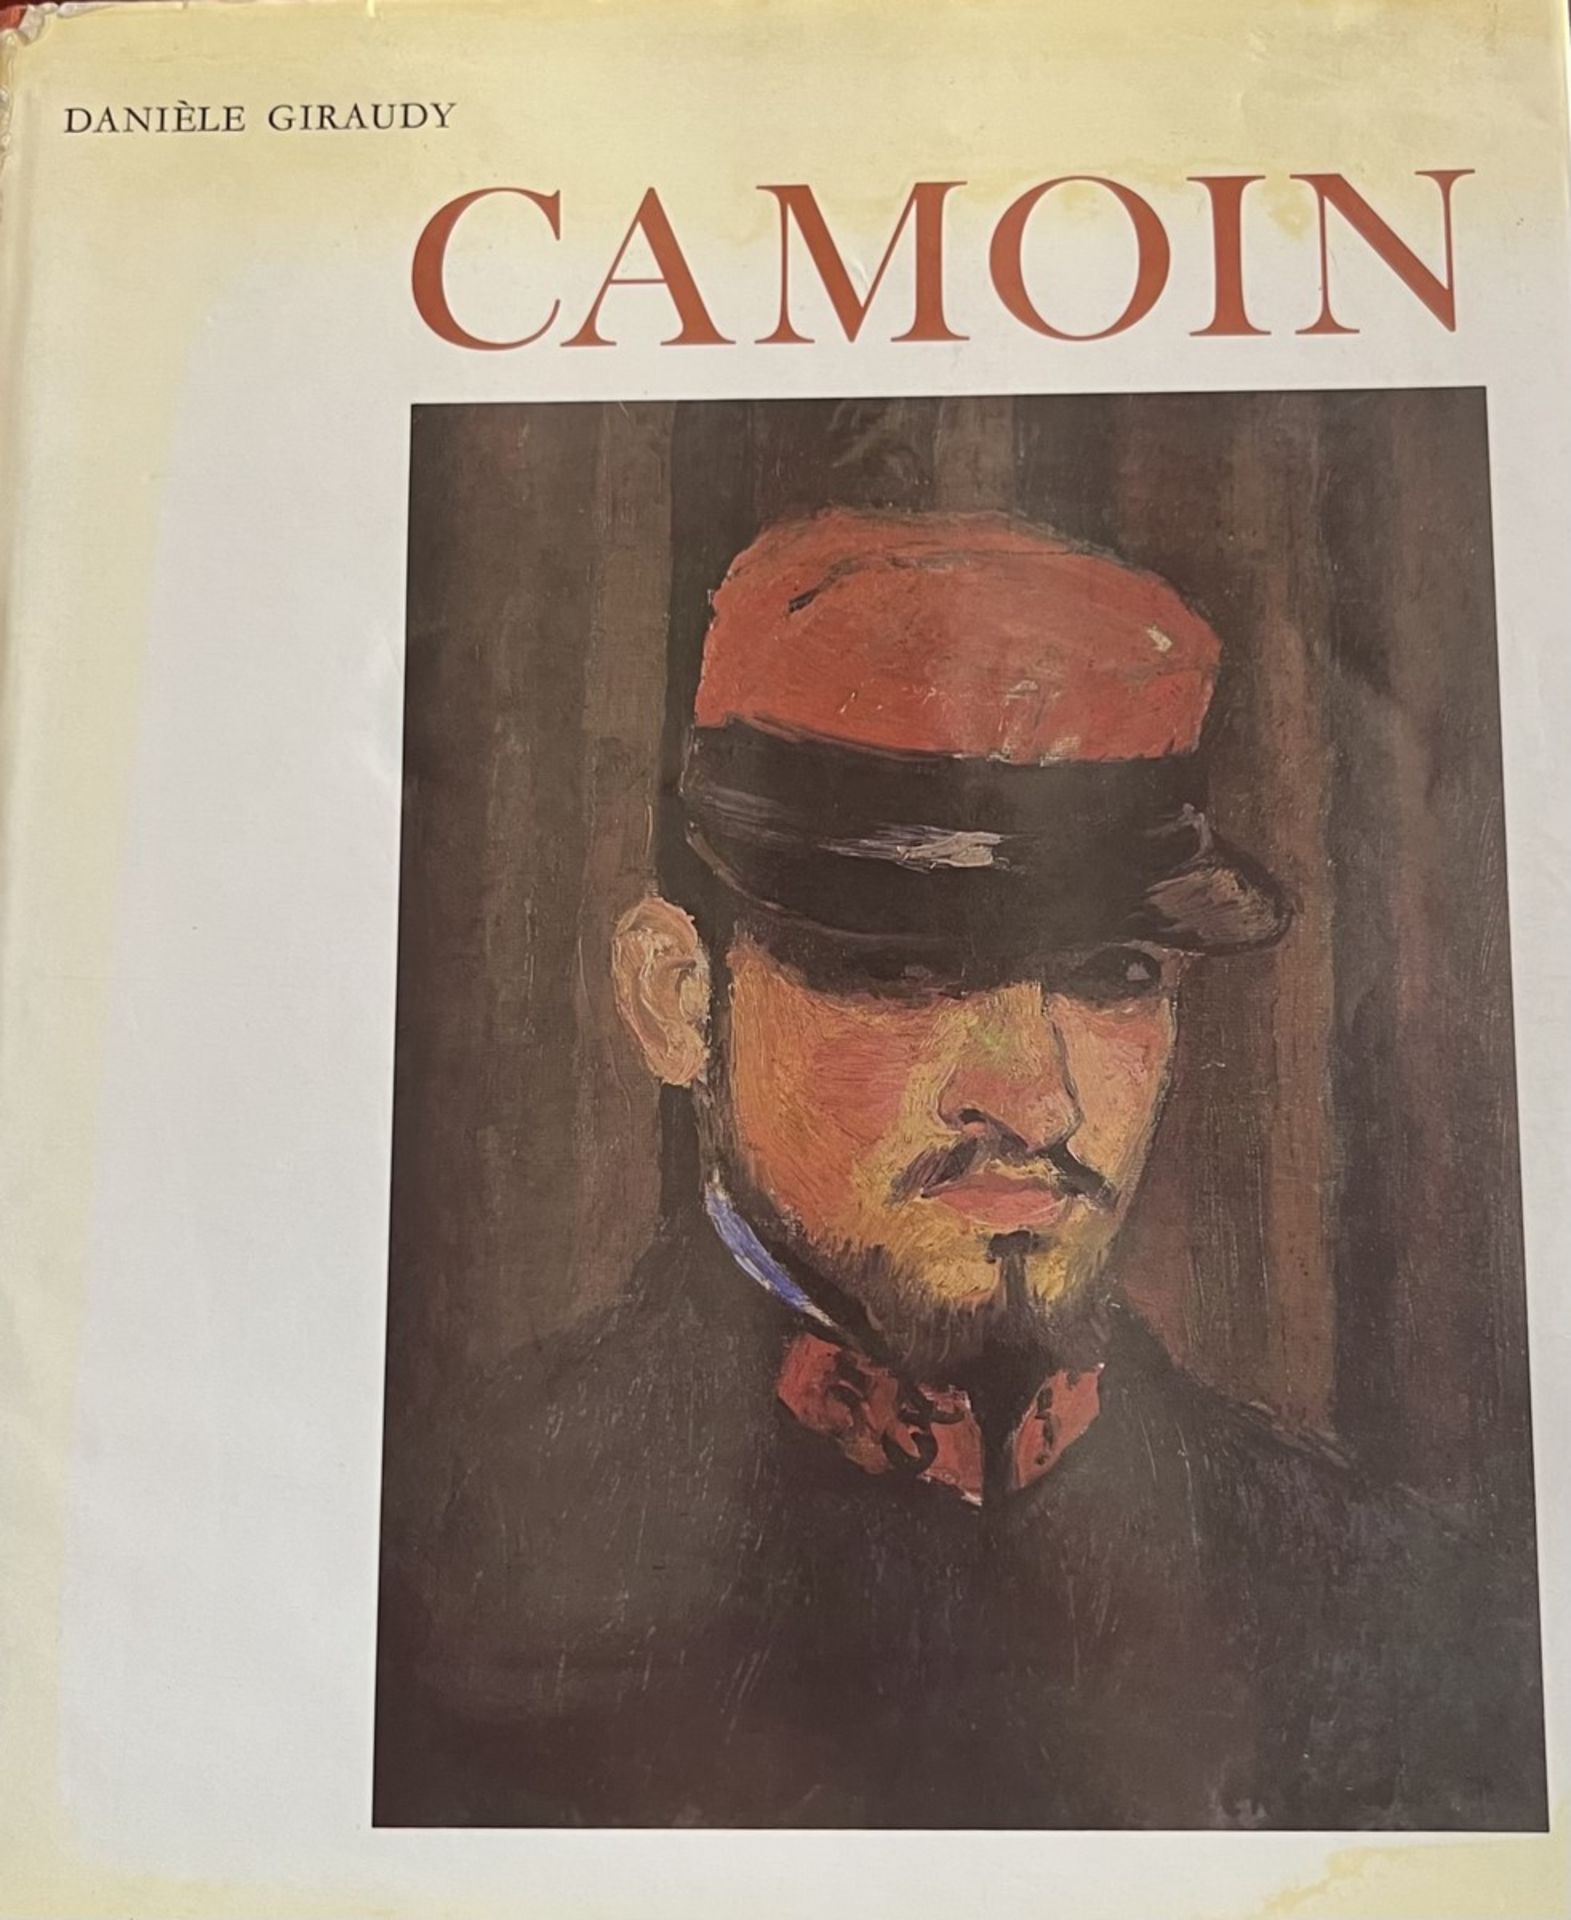 [CAMOIN] Catalogue raisonné - GIRAUDY, Danièle, - Image 2 of 3